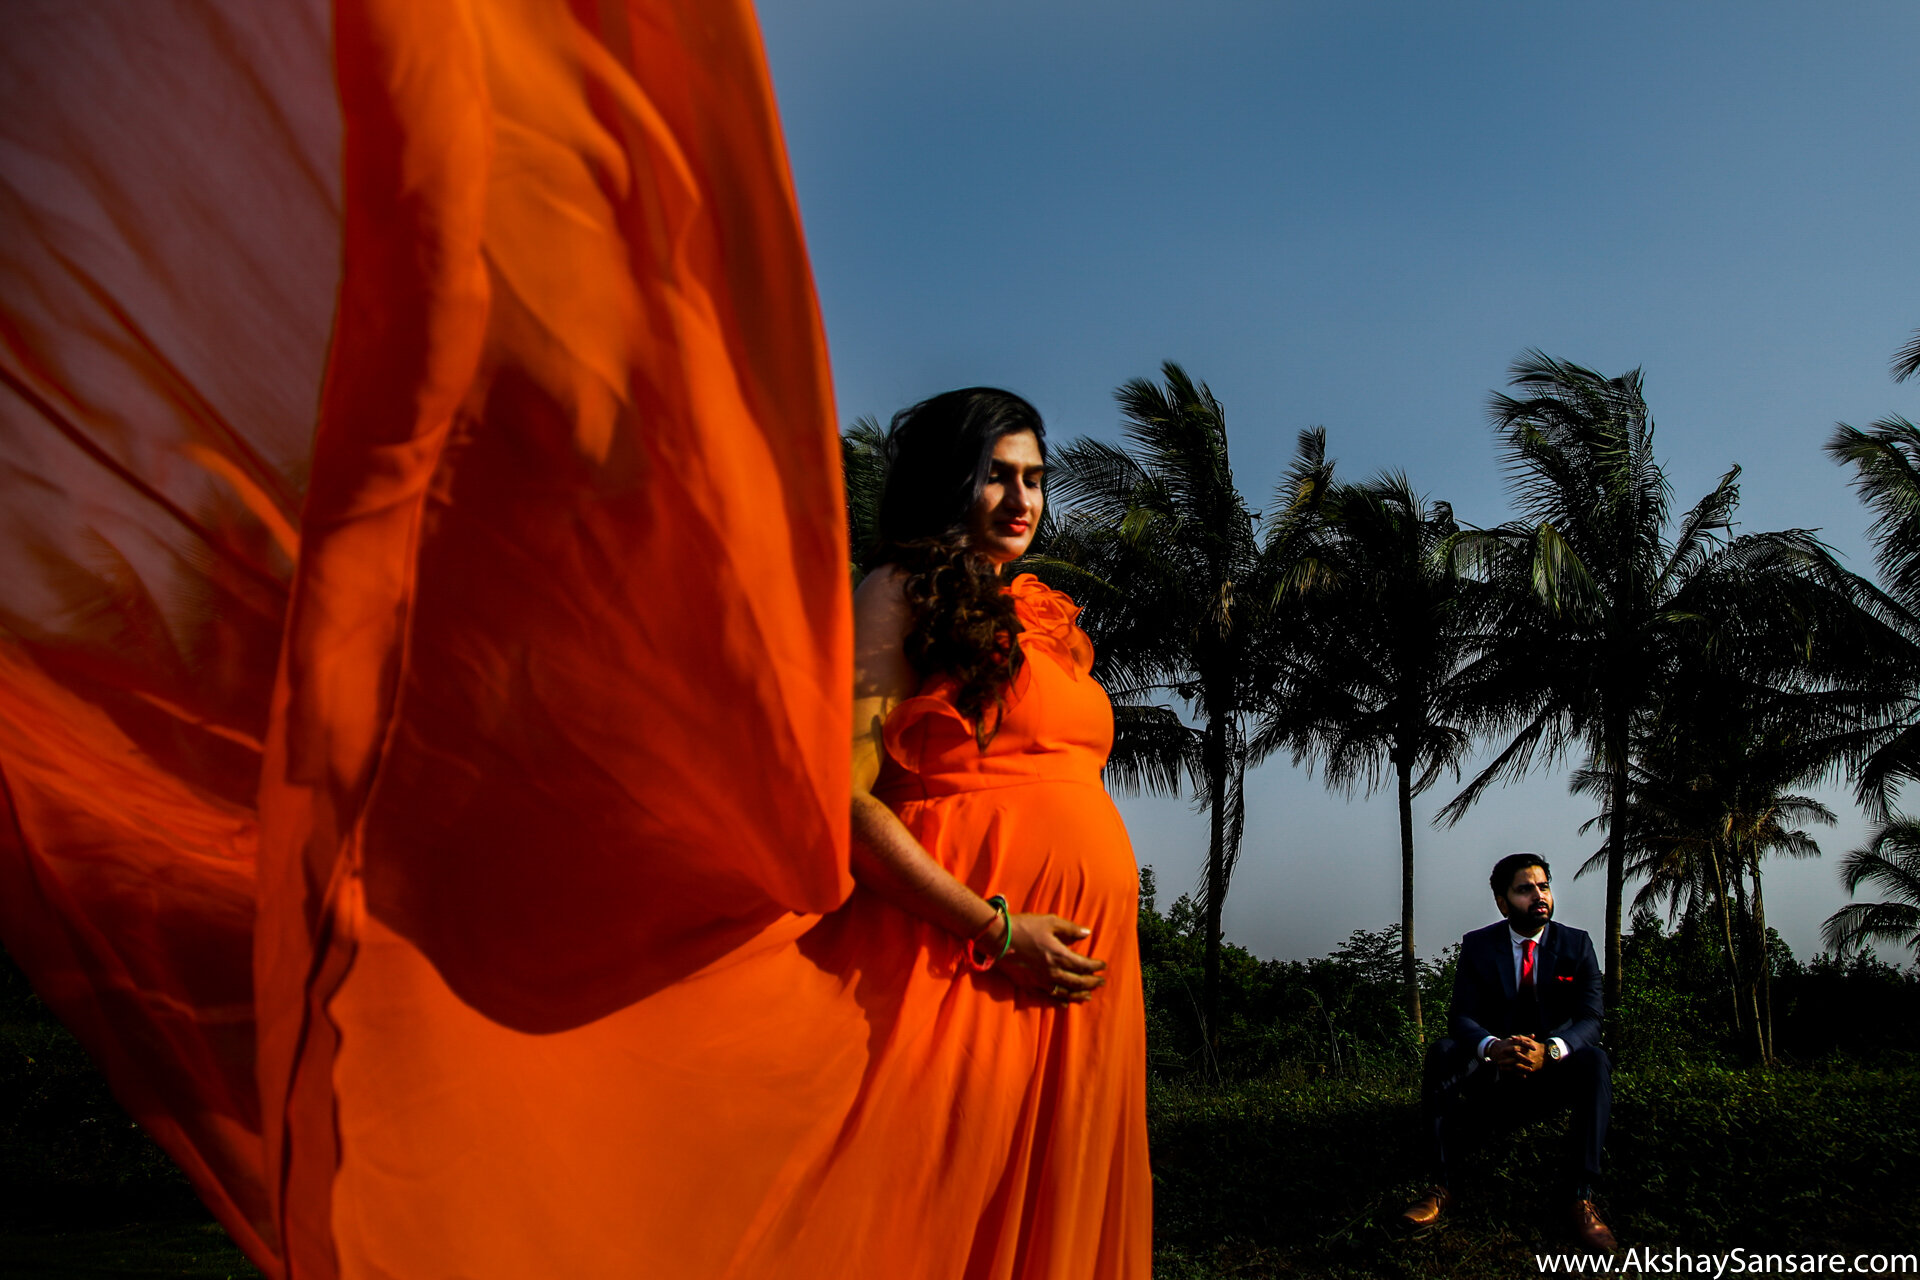 Anuj x Malvika + 1 Akshay Sansare Photography & Films Candid Photographer Best in mumbai Cinematic wedding films-18.jpg